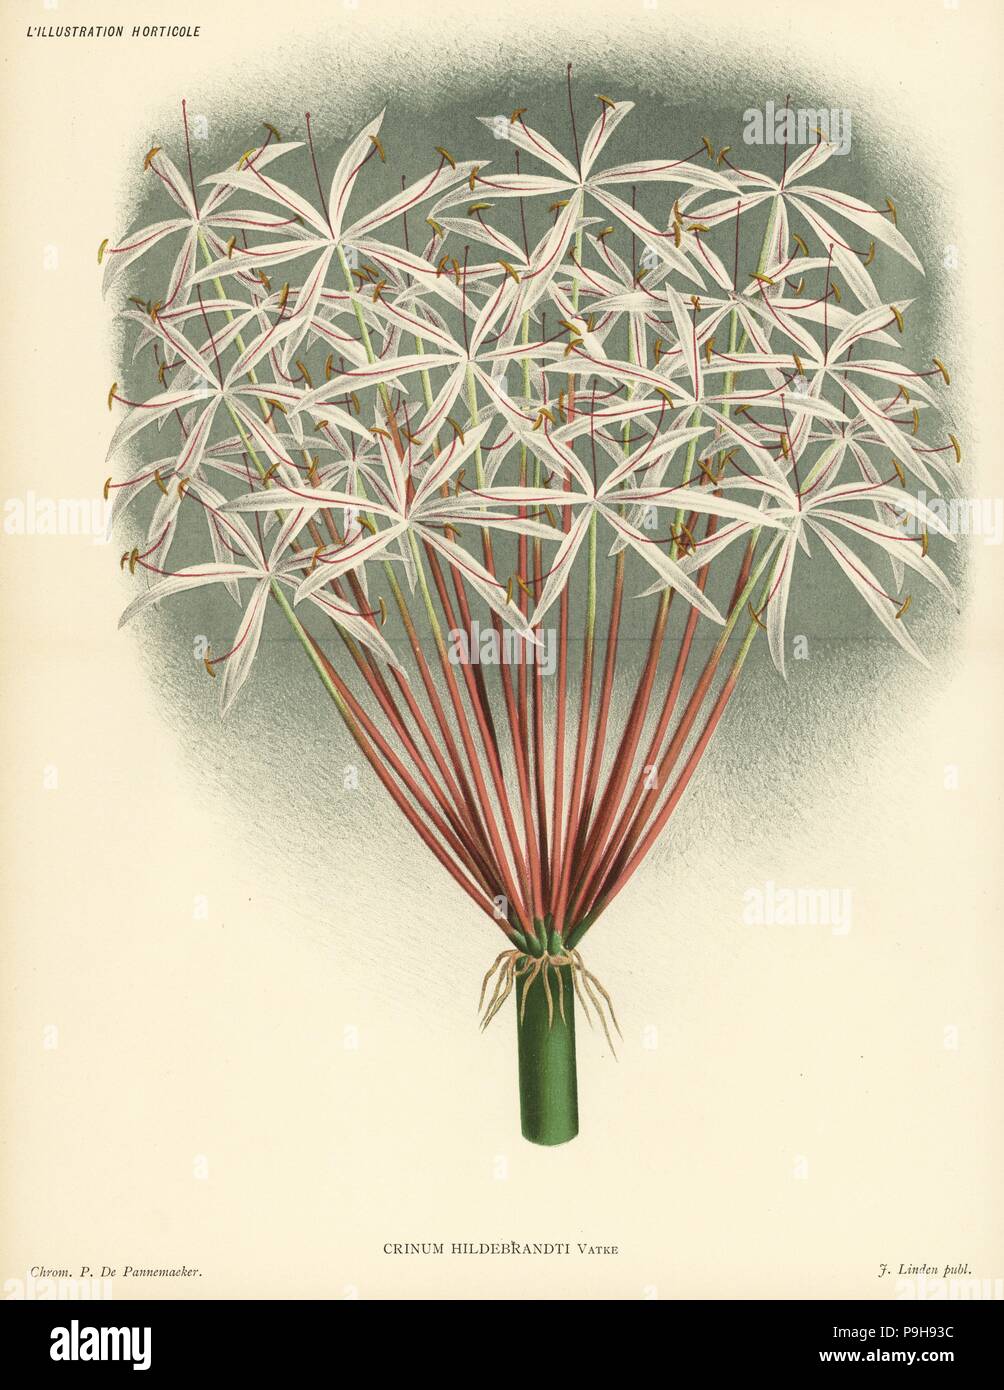 Dr. Hildebrandt's crinum, Crinum hildebrandtii (Crinum hildebrandti). Chromolithograph by Pieter de Pannemaeker from Jean Linden's l'Illustration Horticole, Brussels, 1885. Stock Photo